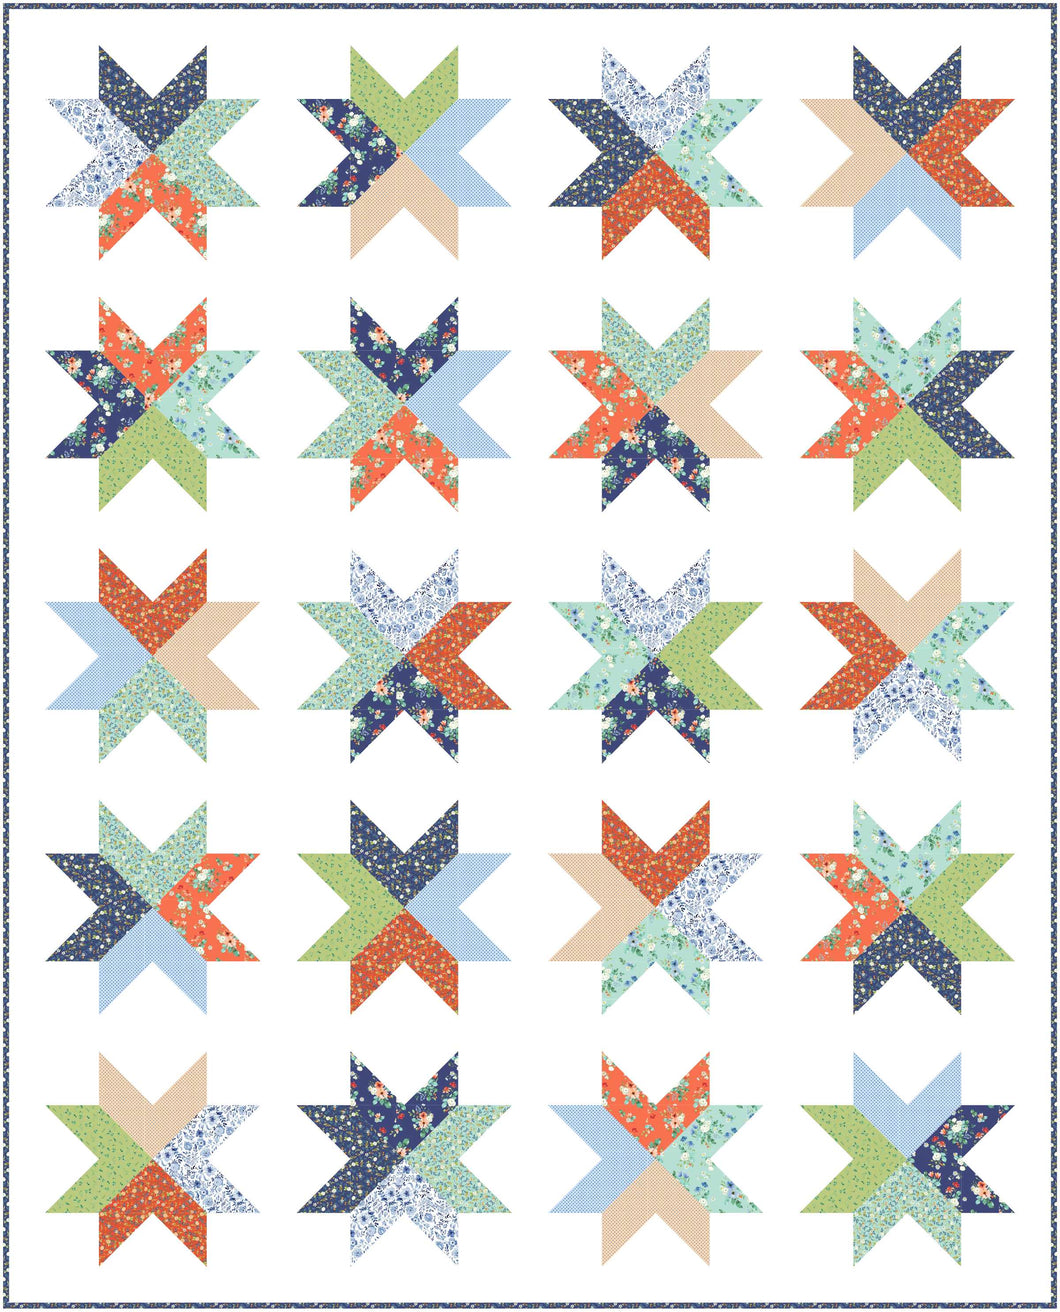 Beaming Modern Star Throw Quilt Kit-Pattern by Emily Tindall of Homemade Emily Jane